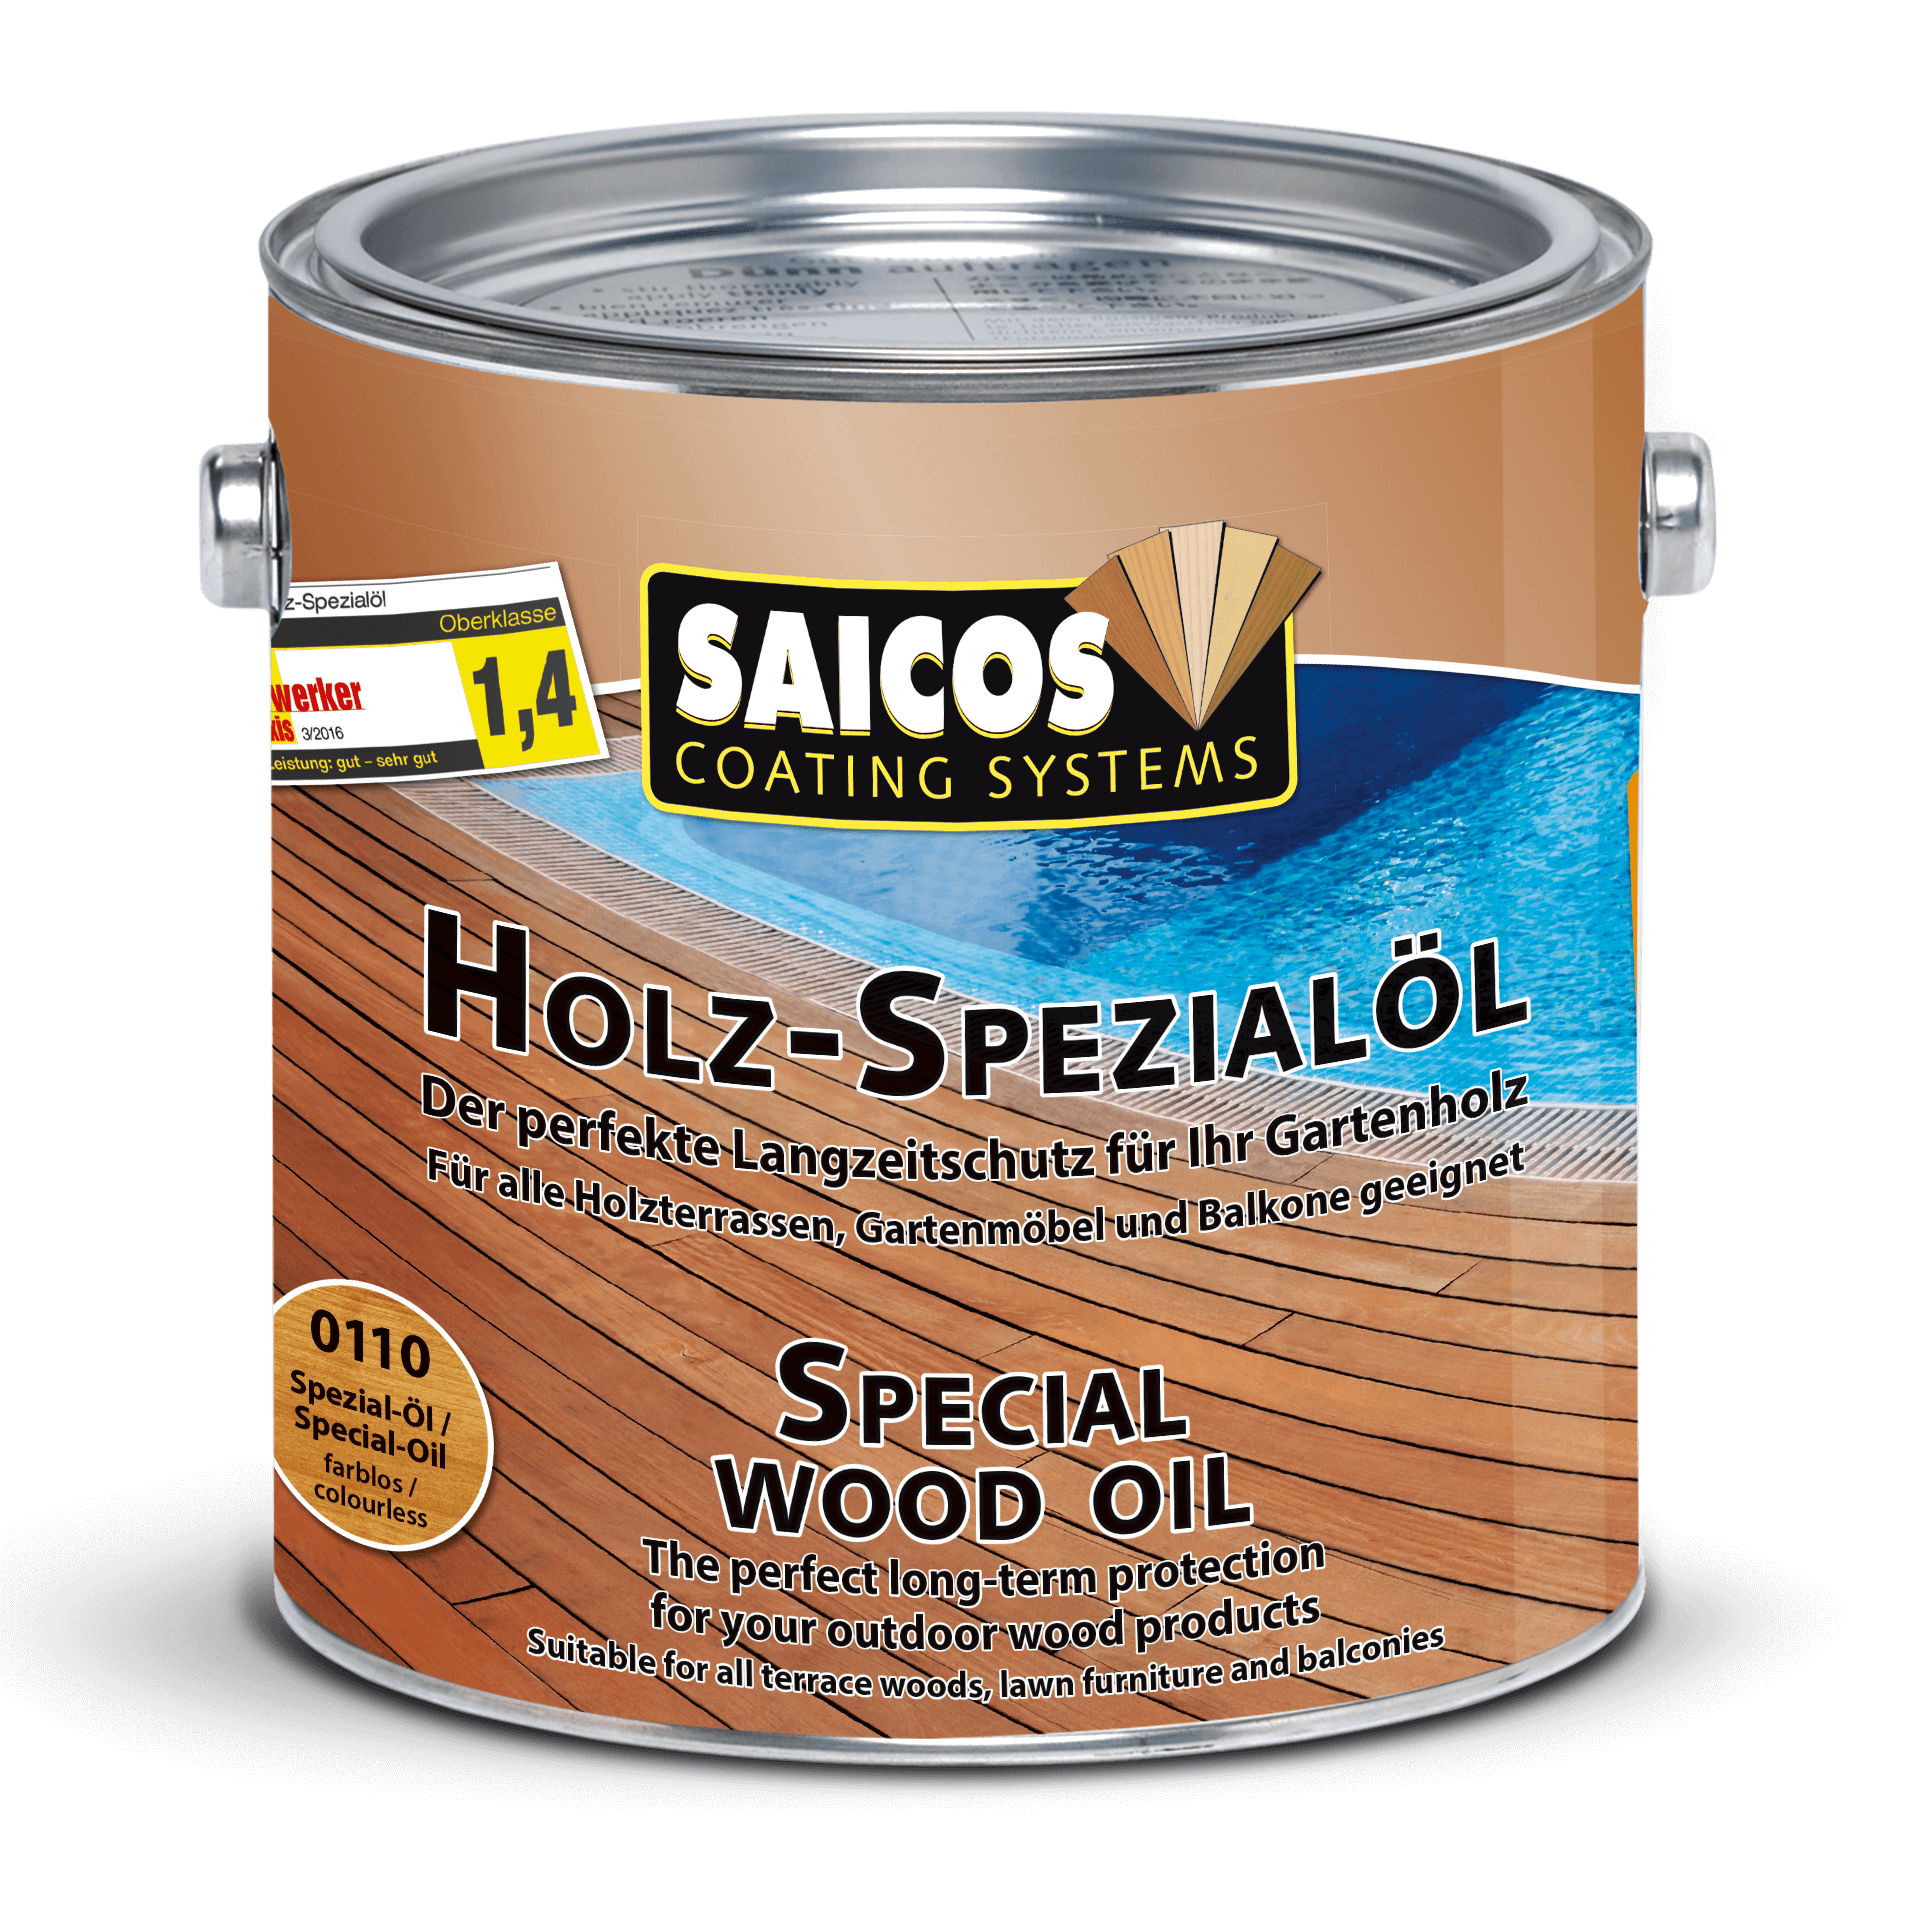 SAICOS Special Wood Oil